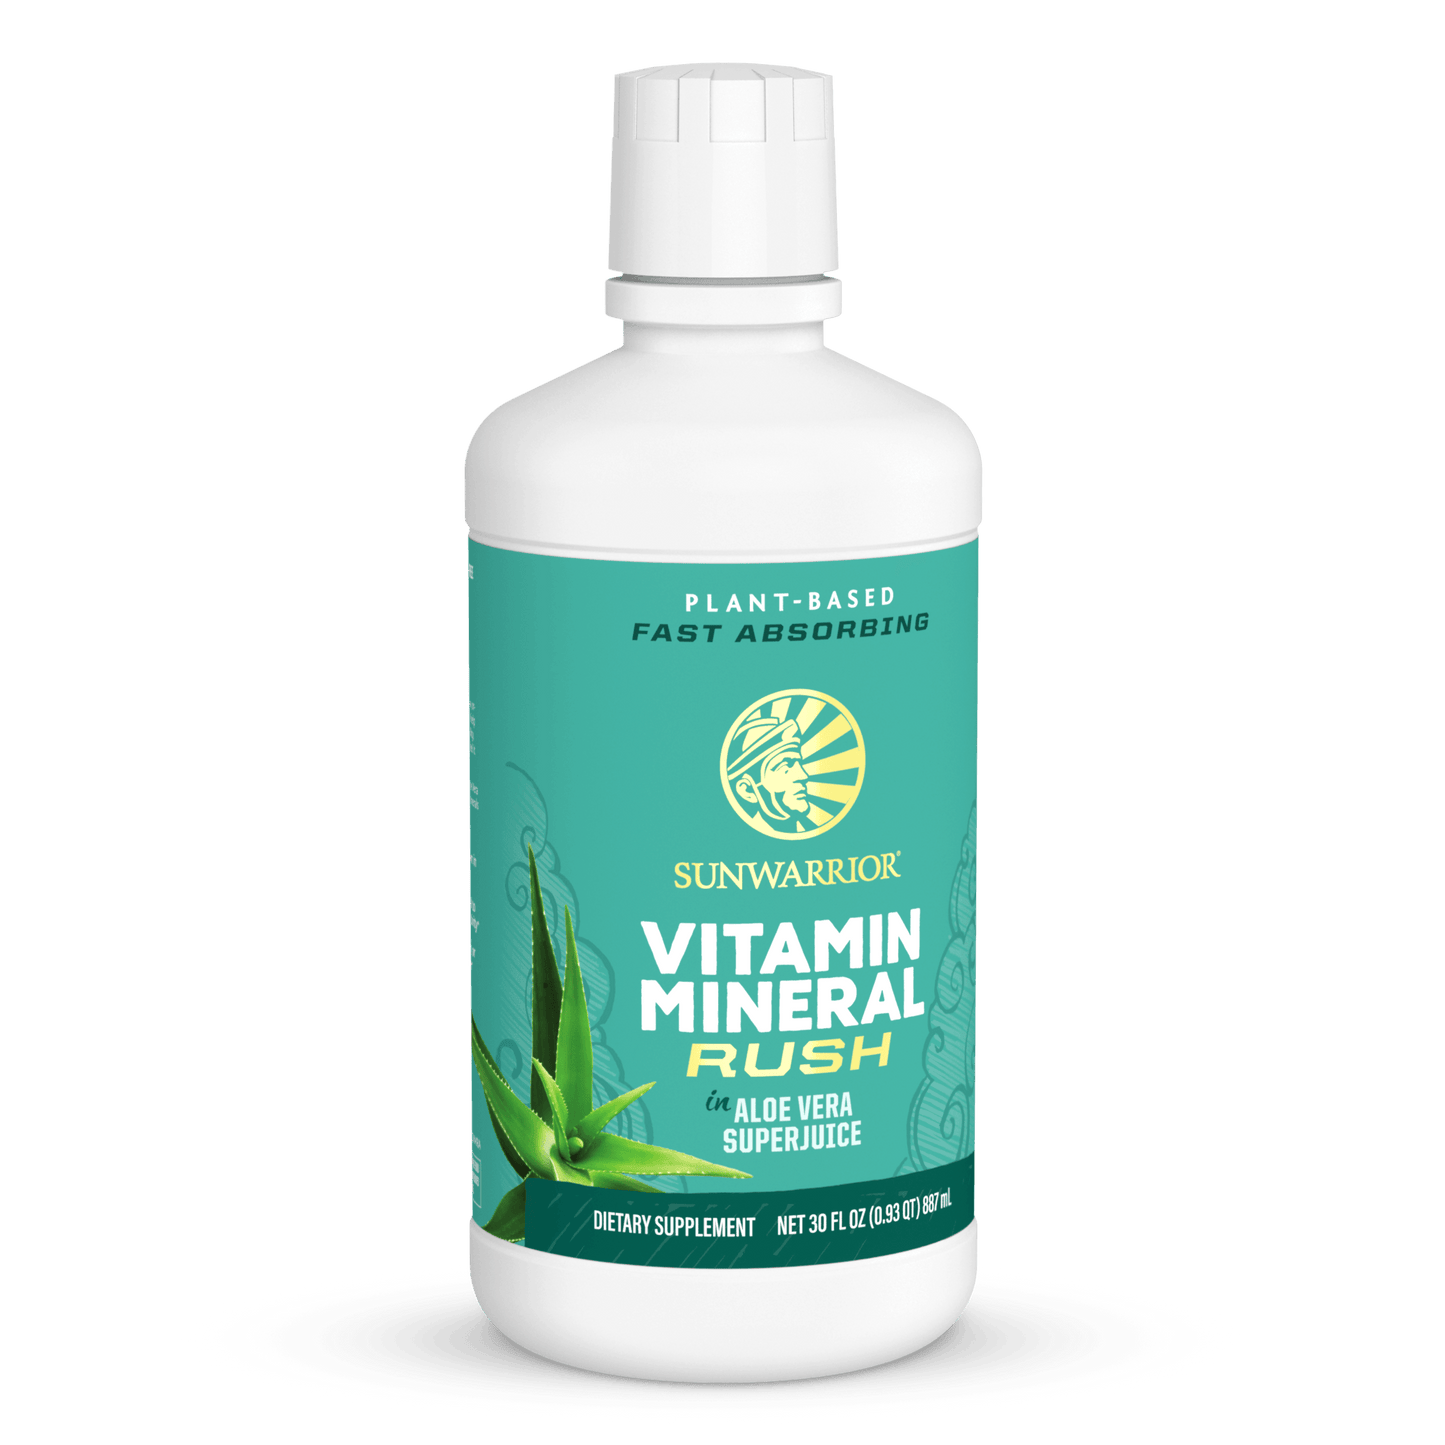 Vitamin Mineral Rush in Aloe Vera Superjuice